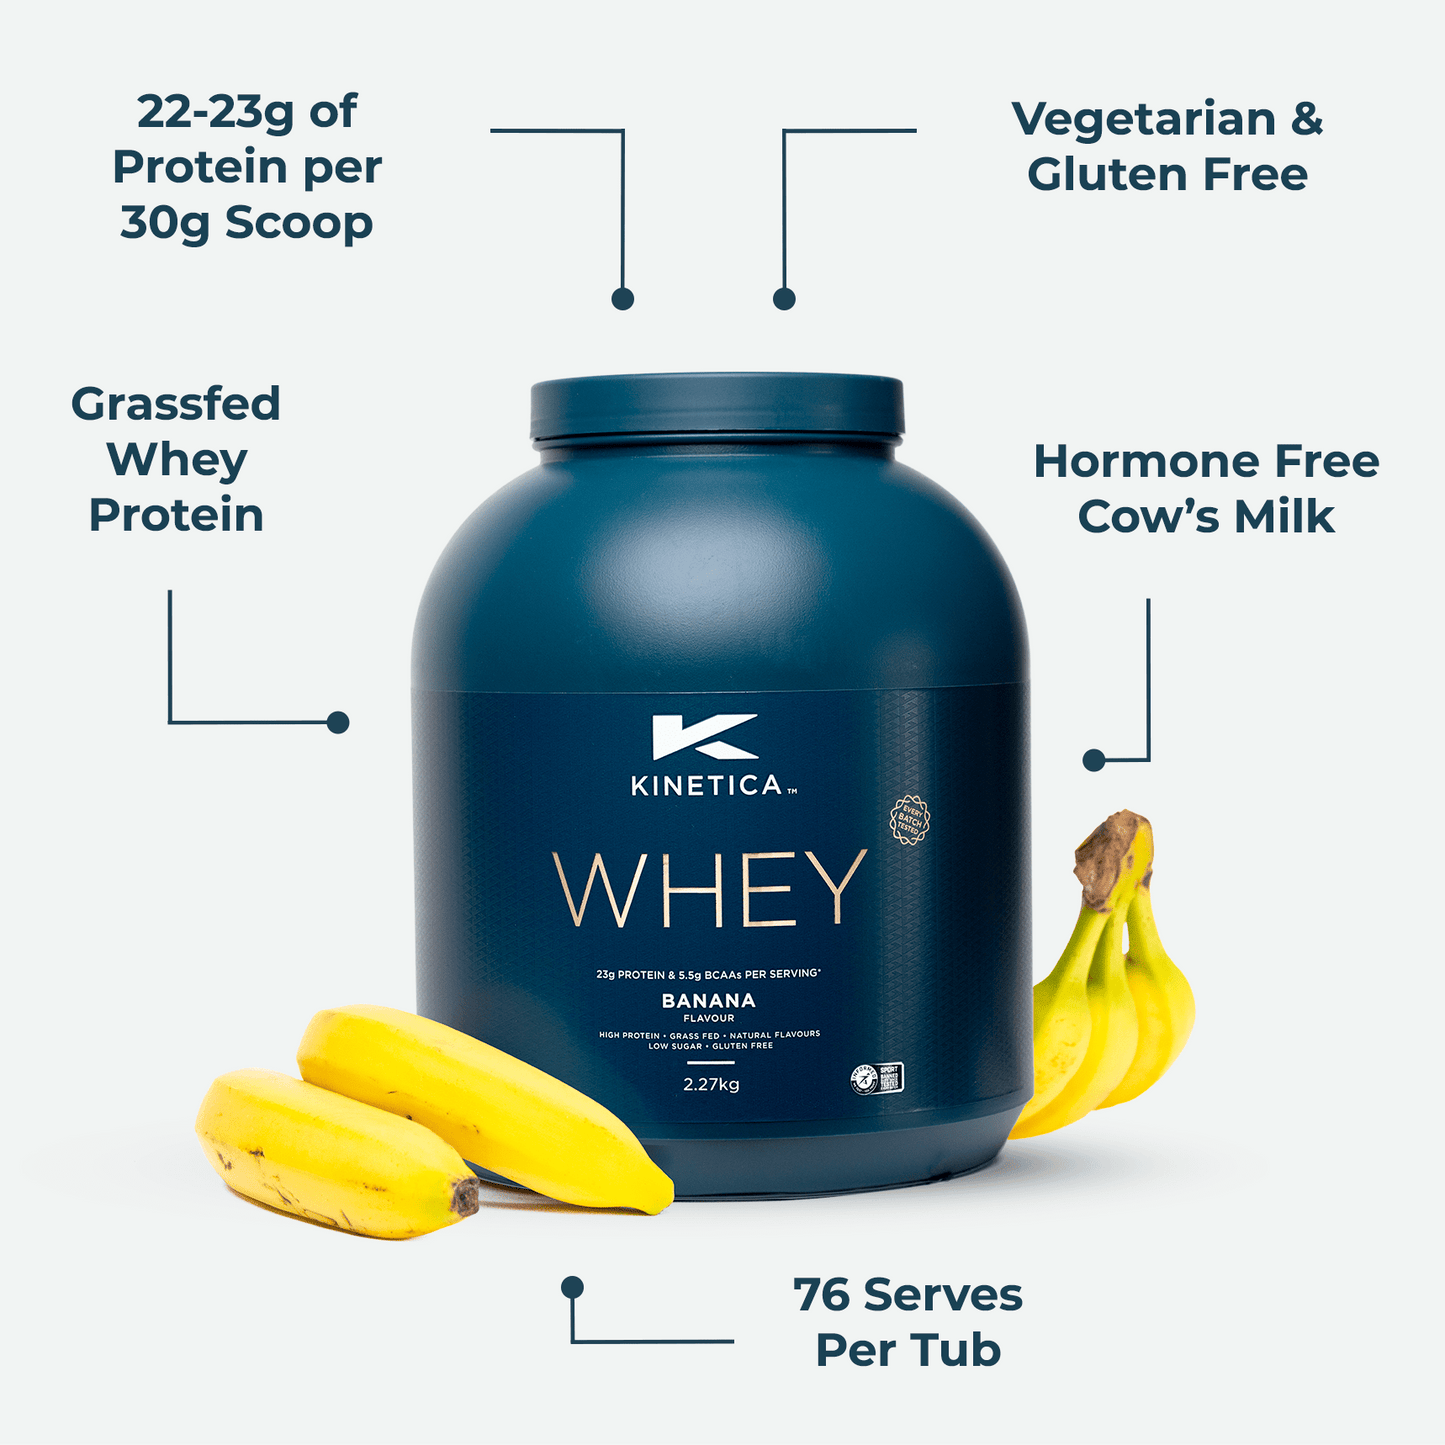 Whey Protein Banana 2.27kg